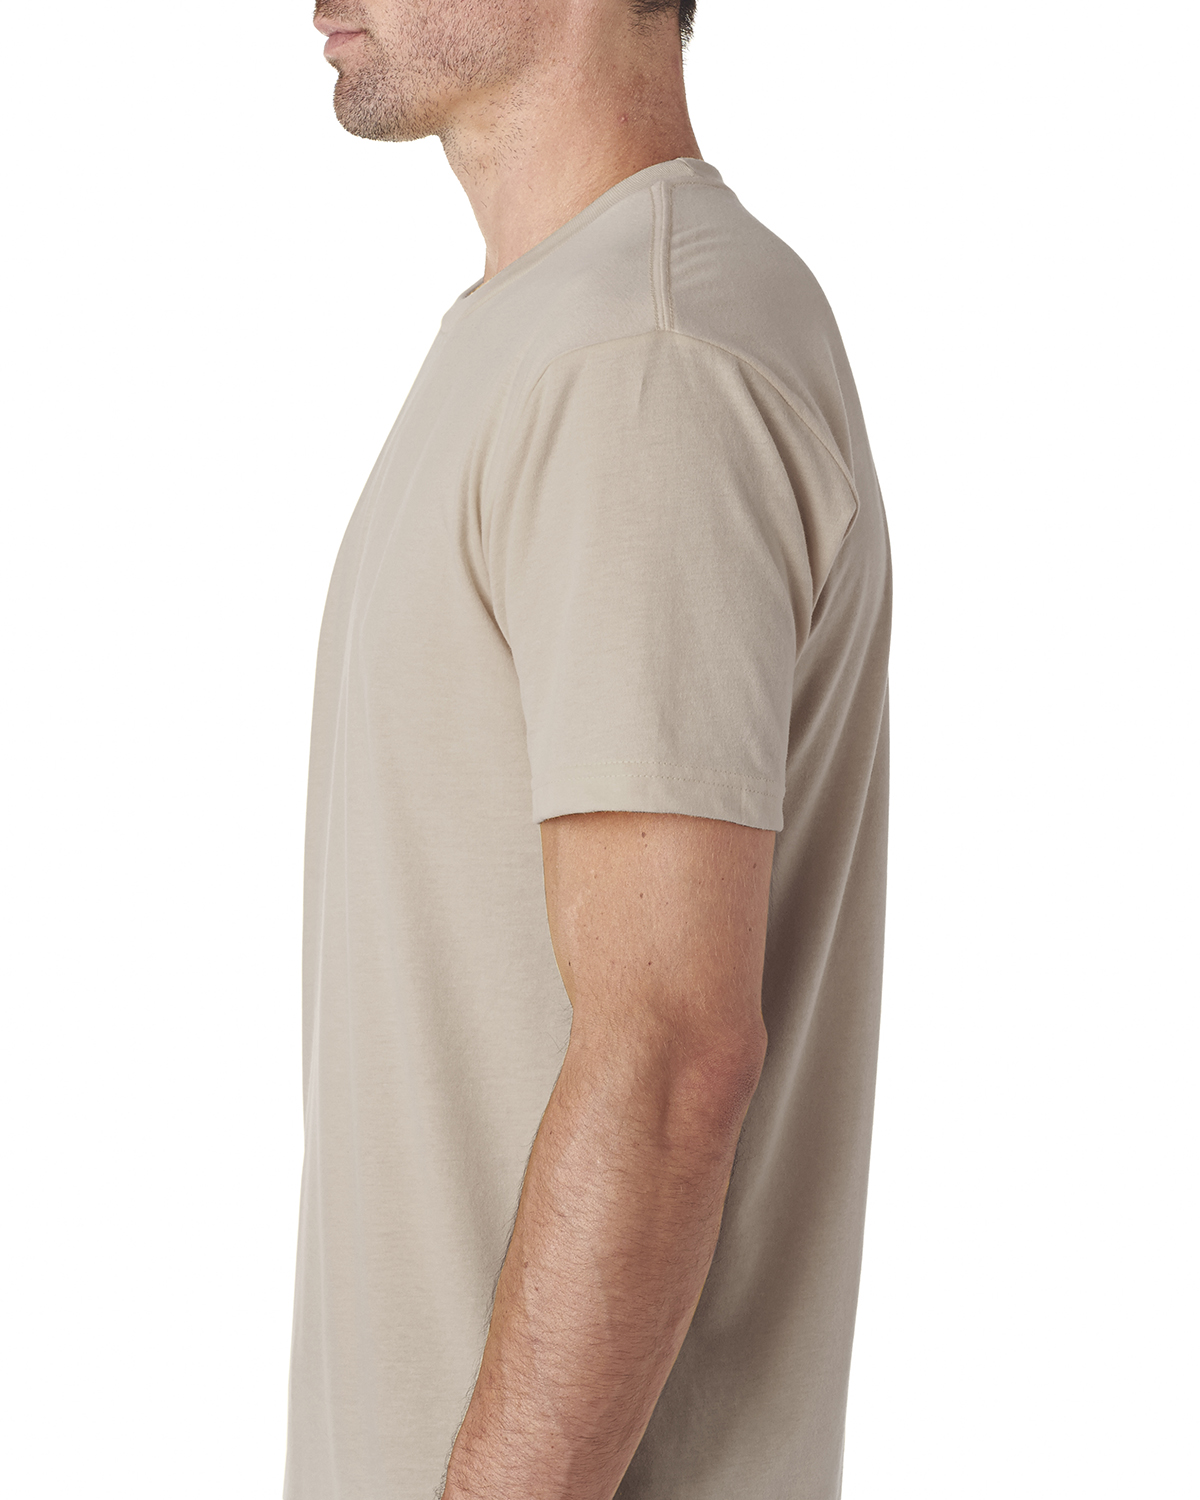 NEW Next Level Men's Sueded Crew next Premium Fit XS-XL T-Shirt R-6410 ...